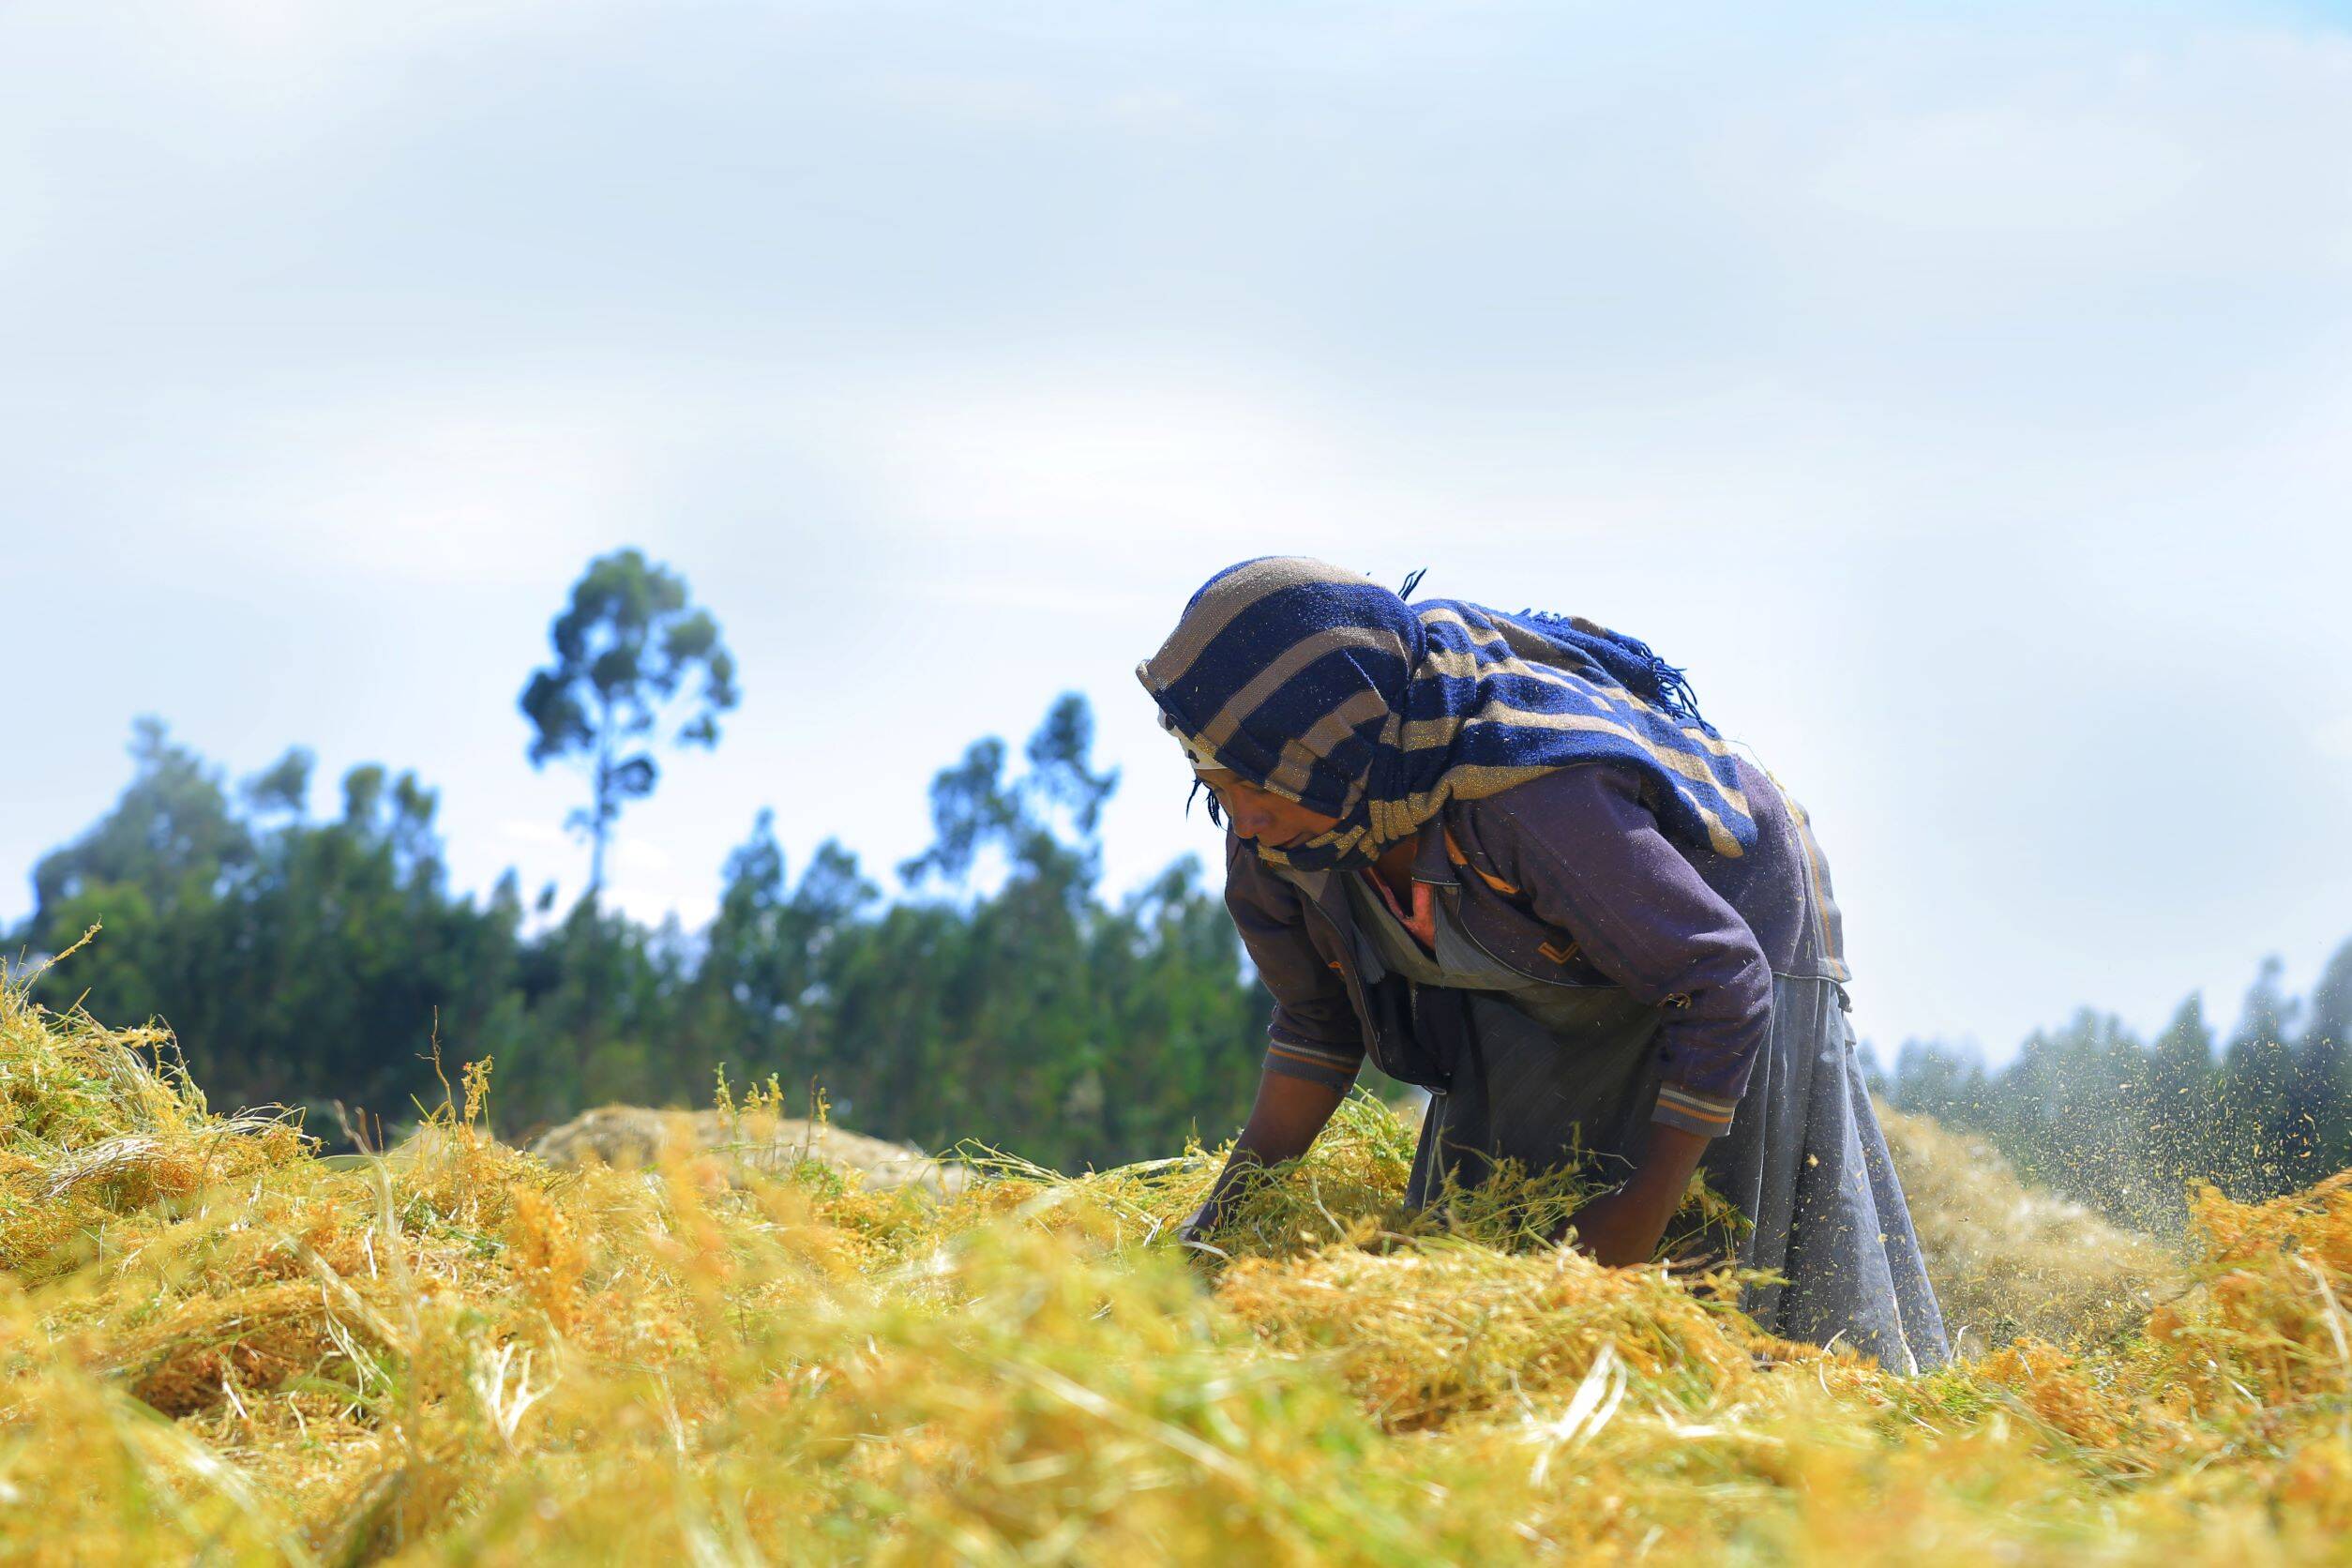 Female farmer after the lentil harvest, Central Ethiopia